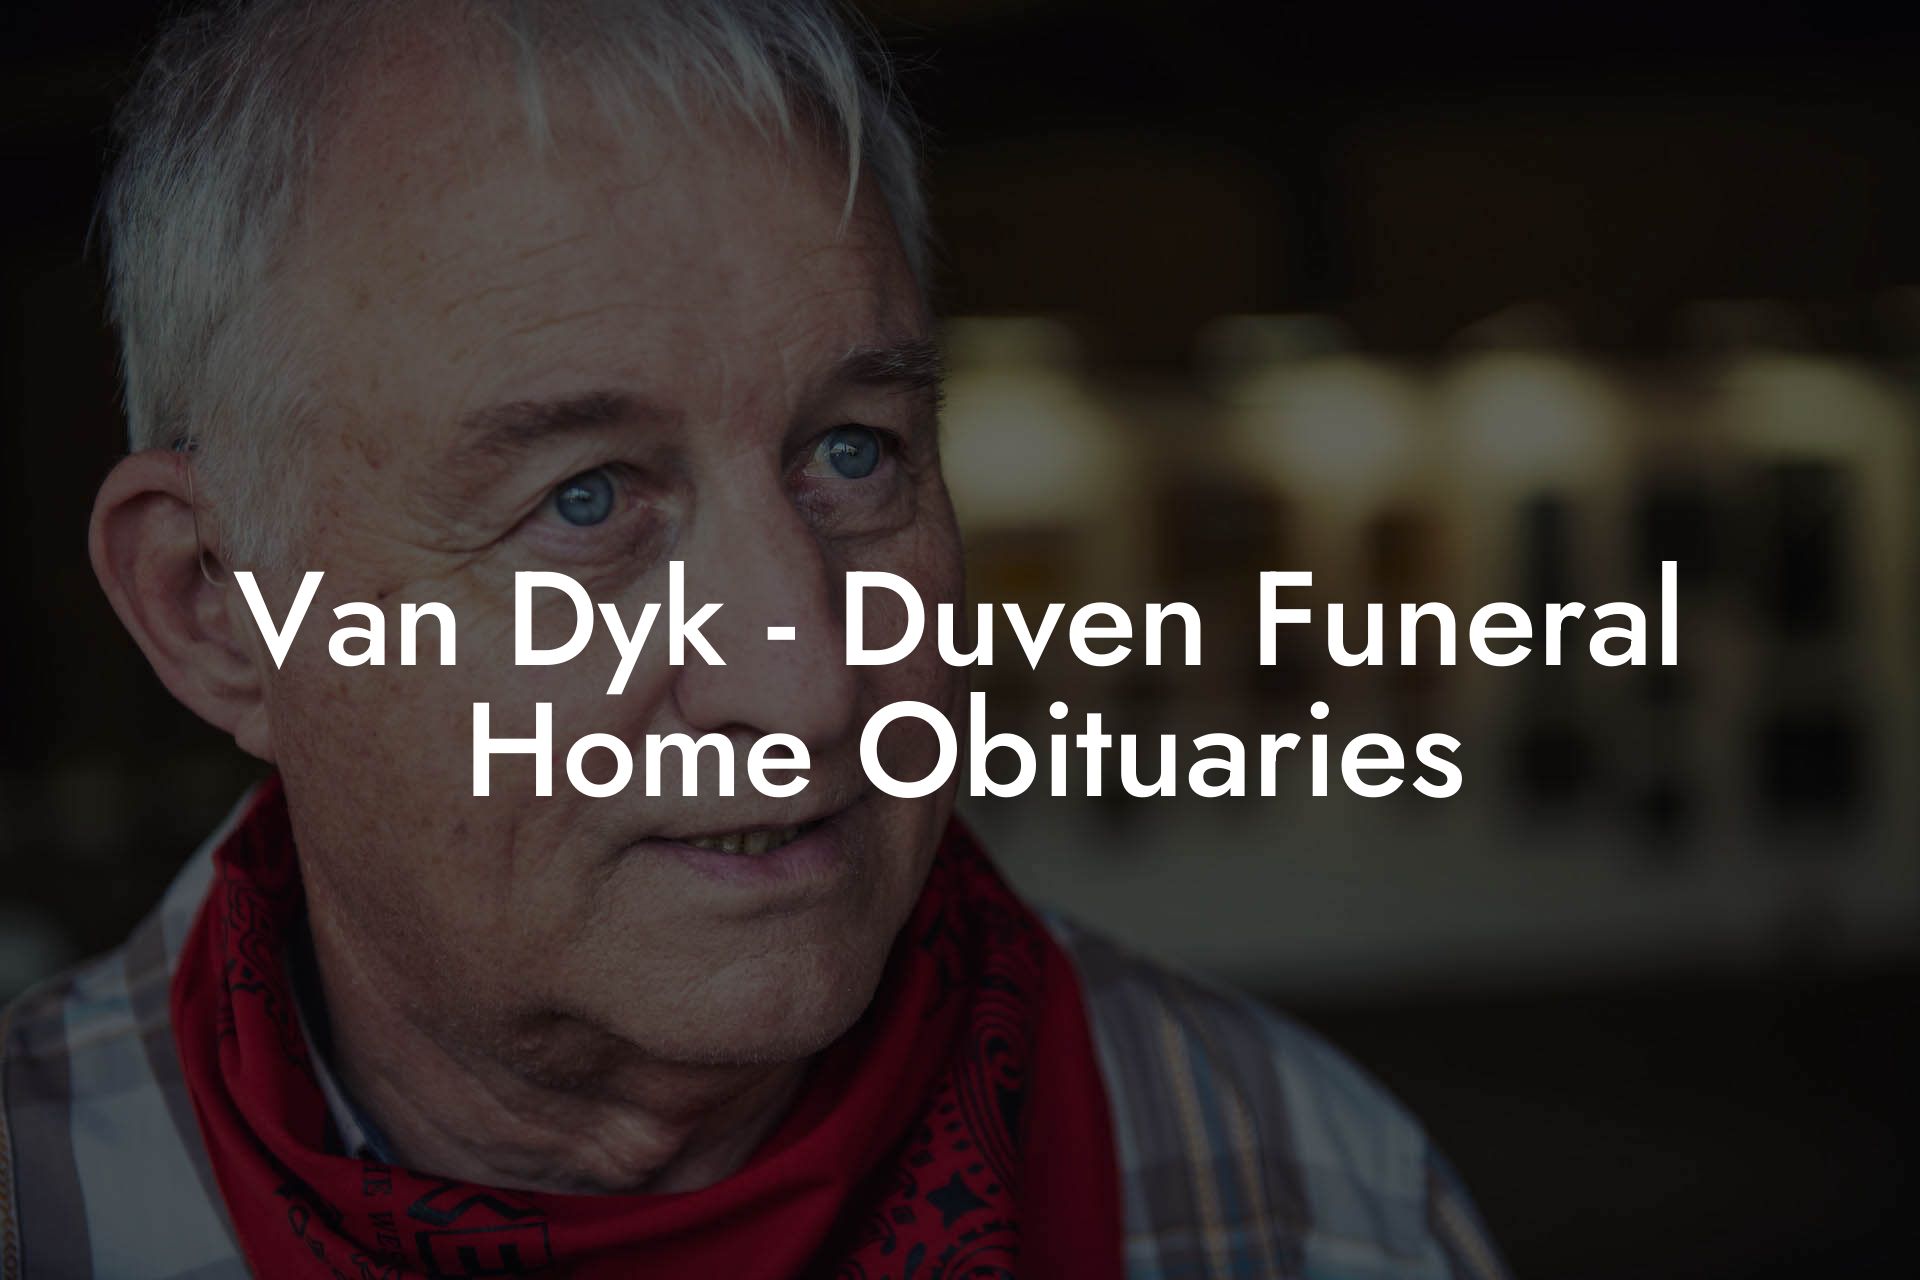 Van Dyk - Duven Funeral Home Obituaries